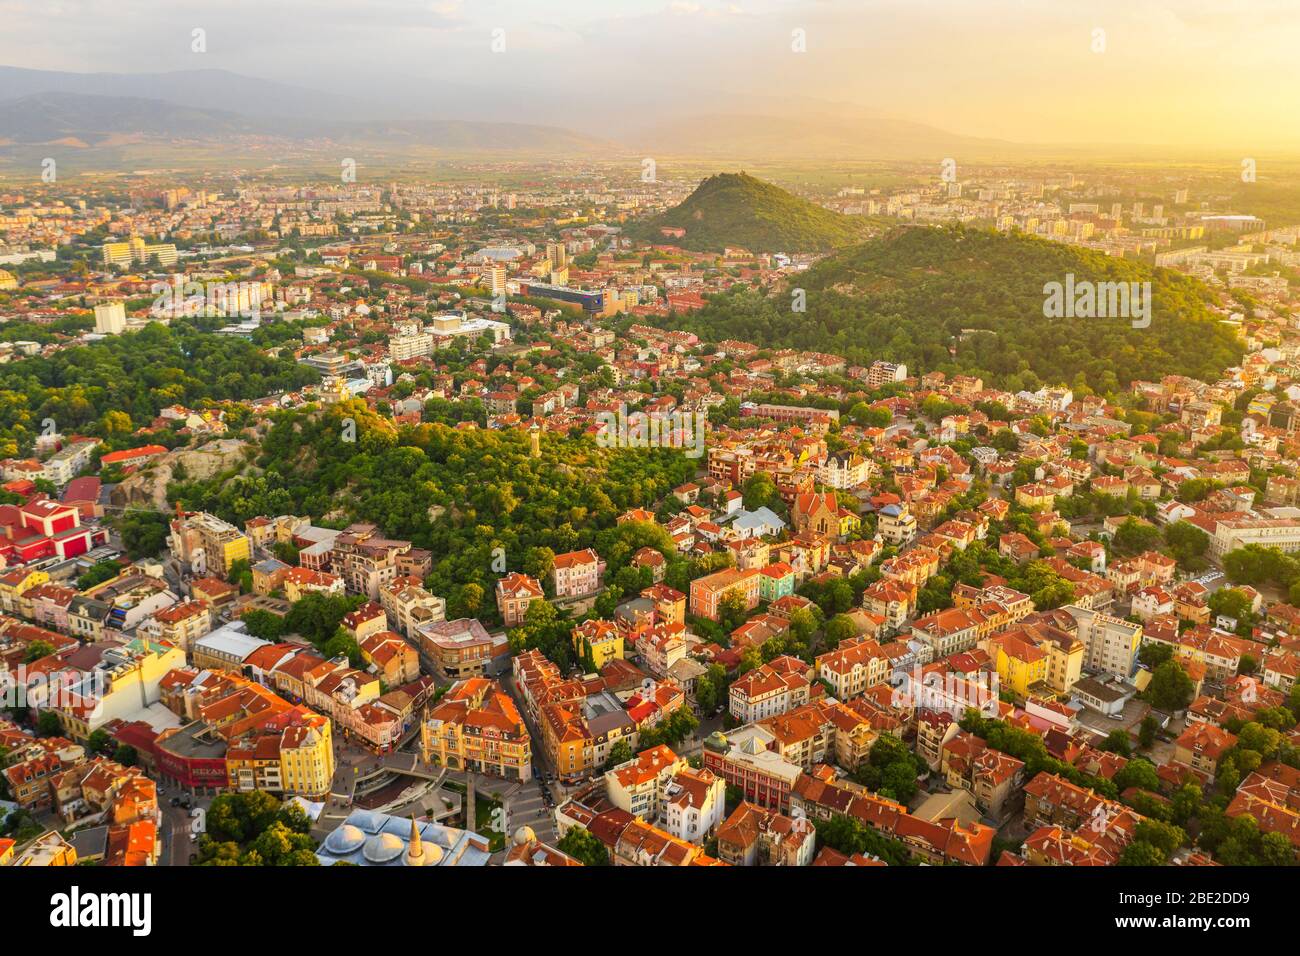 Europe, Bulgaria, aerial view of Plovdiv city center Stock Photo